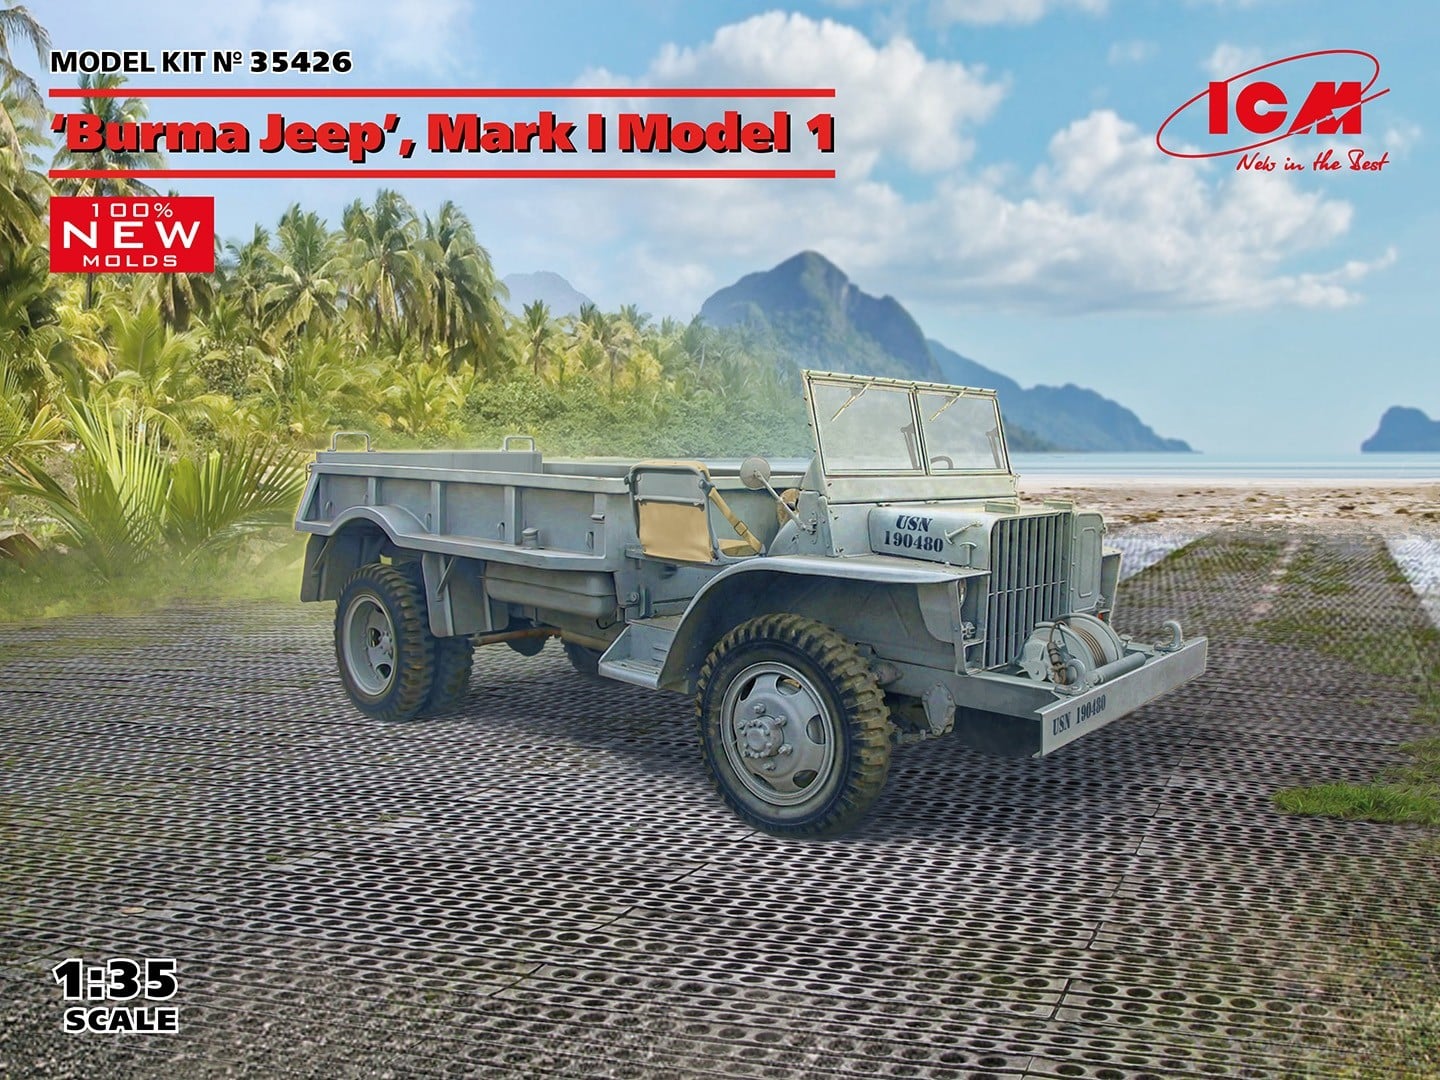 IN PROCESS! 100% new molds! “Burma Jeep”, Mark I Model 1